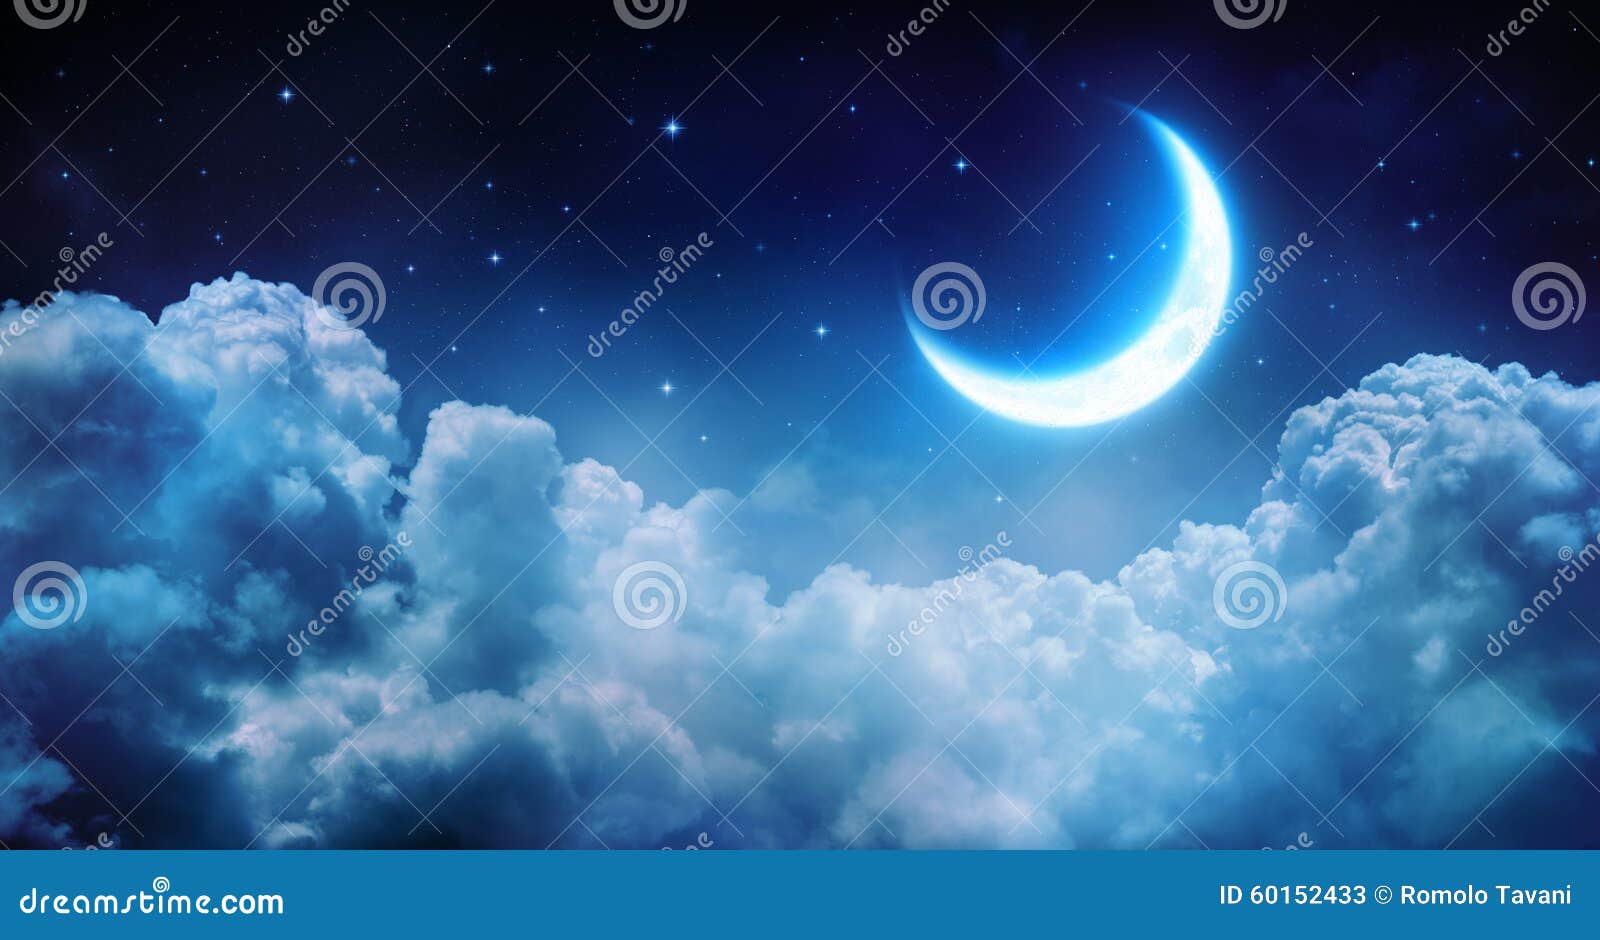 romantic moon in starry night